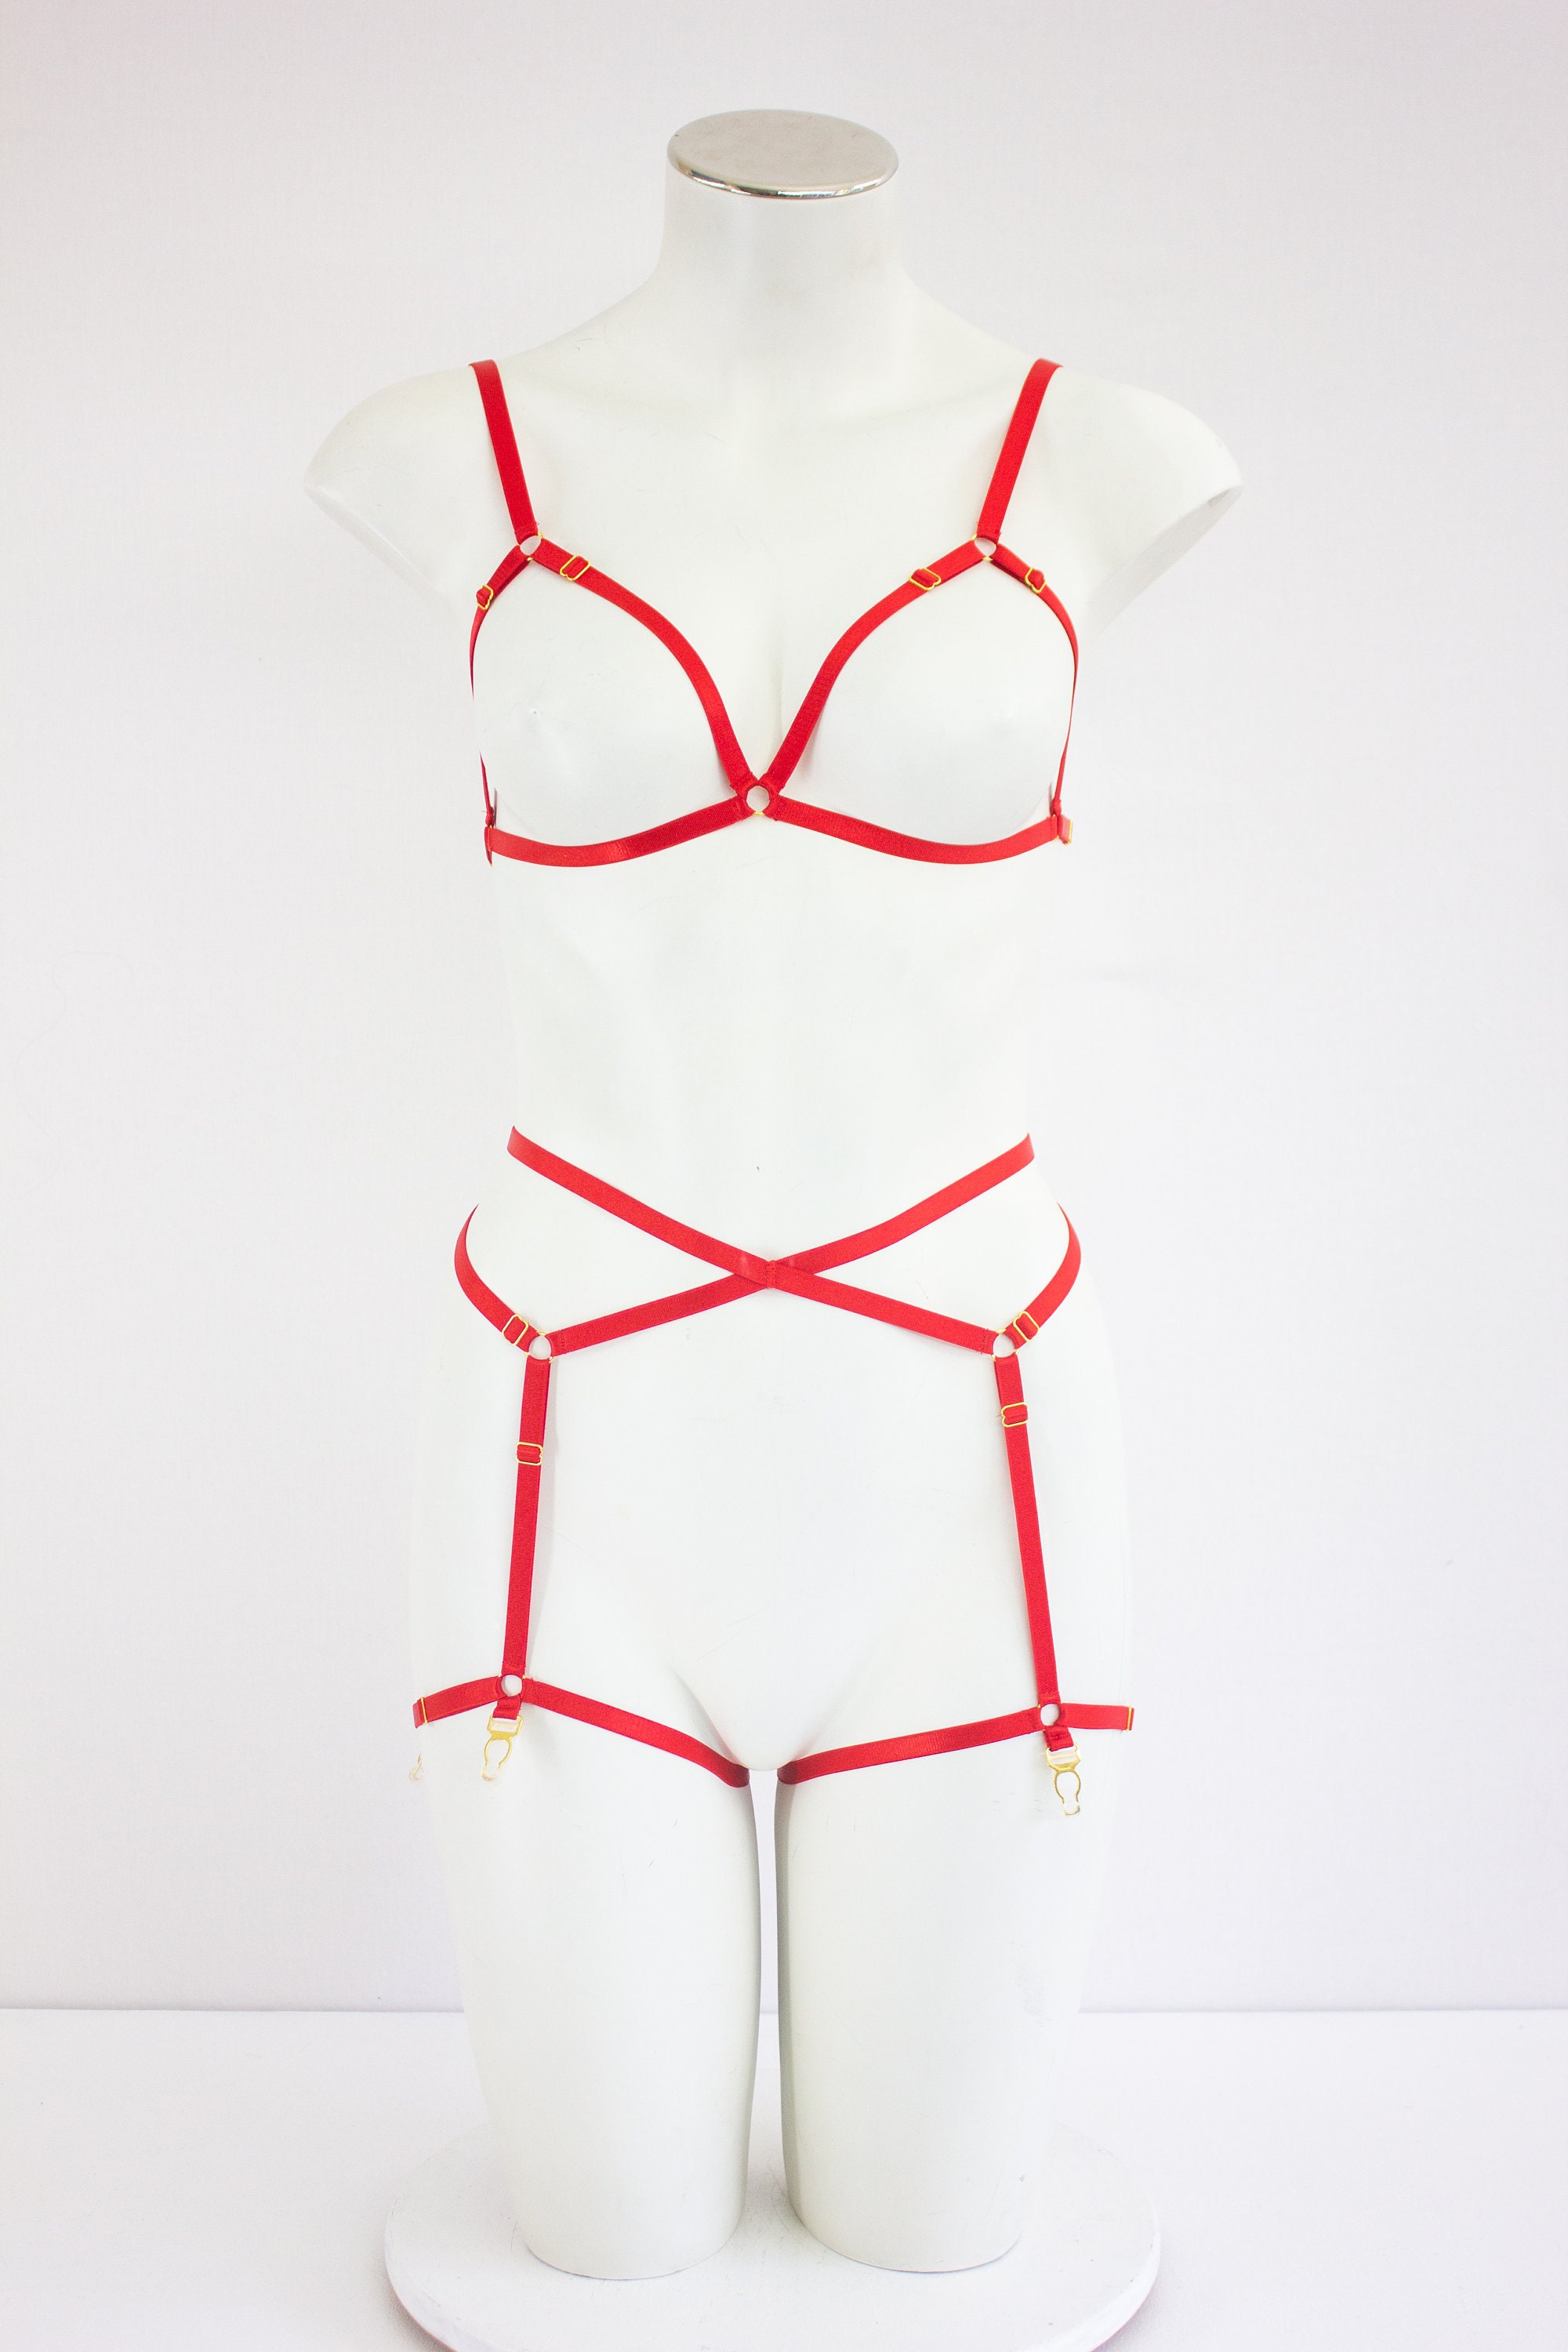 Red Body Harness Lingerie Set Red Garter Belt Cage Bralette Costume Harness Triangle Bra 